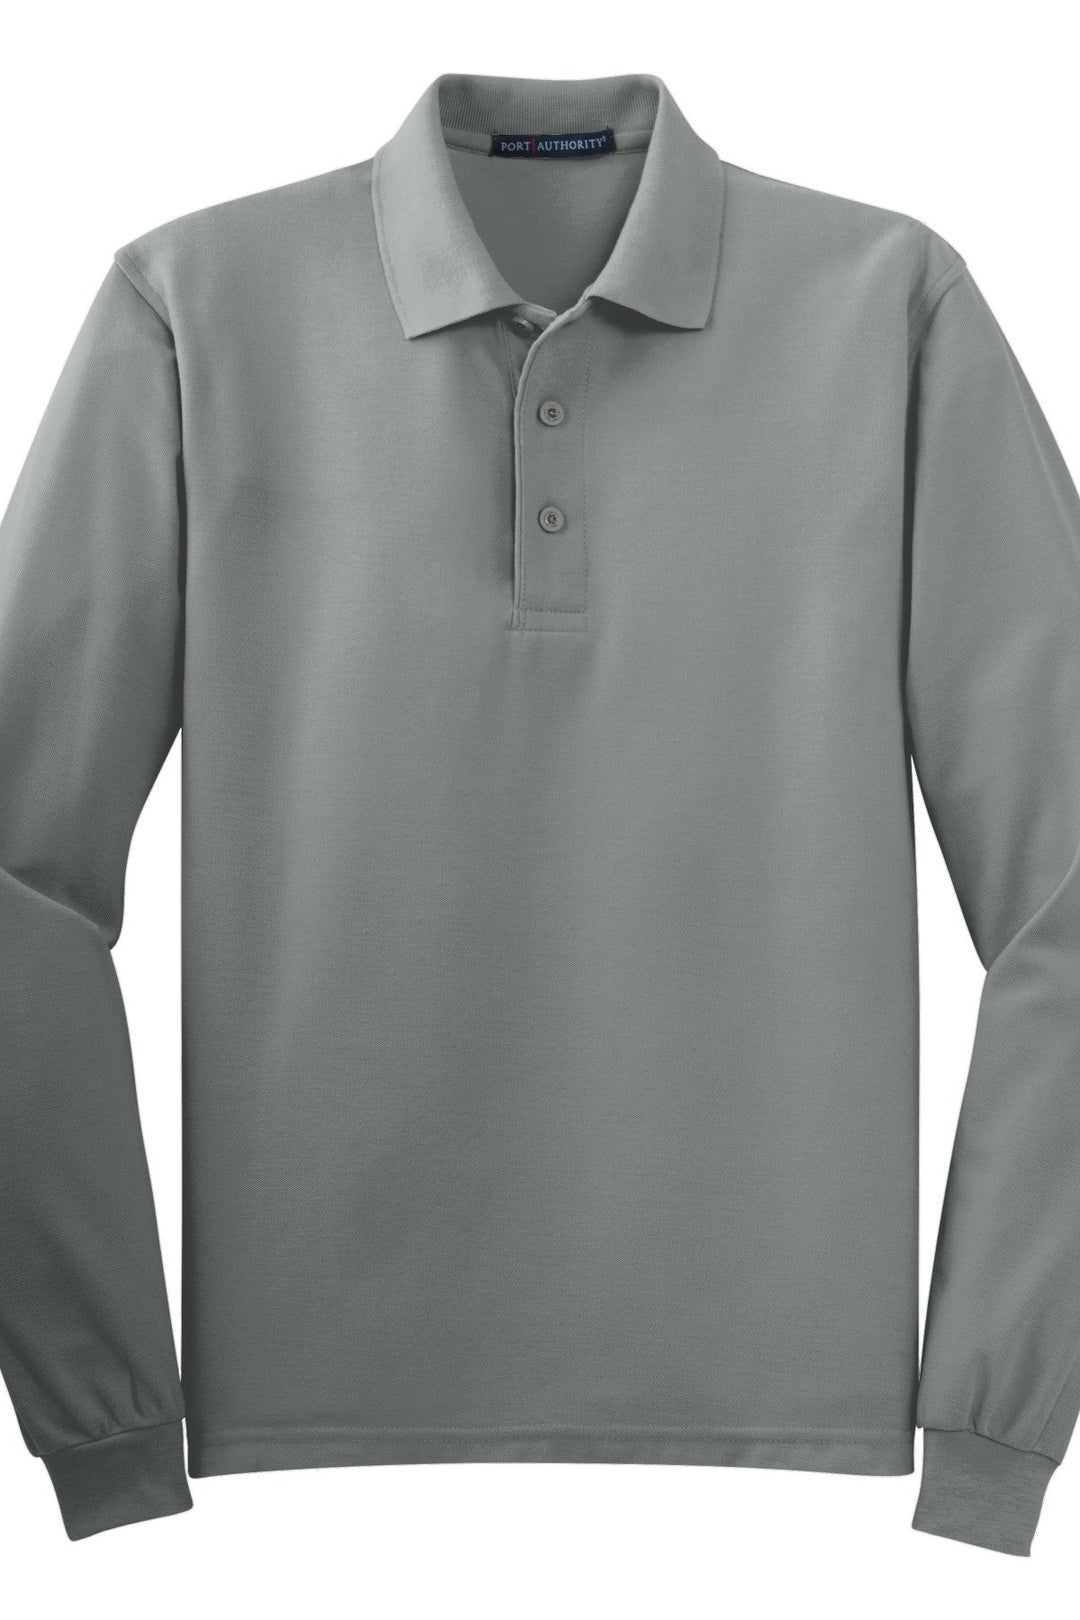 CCS - Port Authority Unisex Long Sleeve Silk Touch Polo - Premium School Uniform from Pat's Monograms - Just $27! Shop now at Pat's Monograms